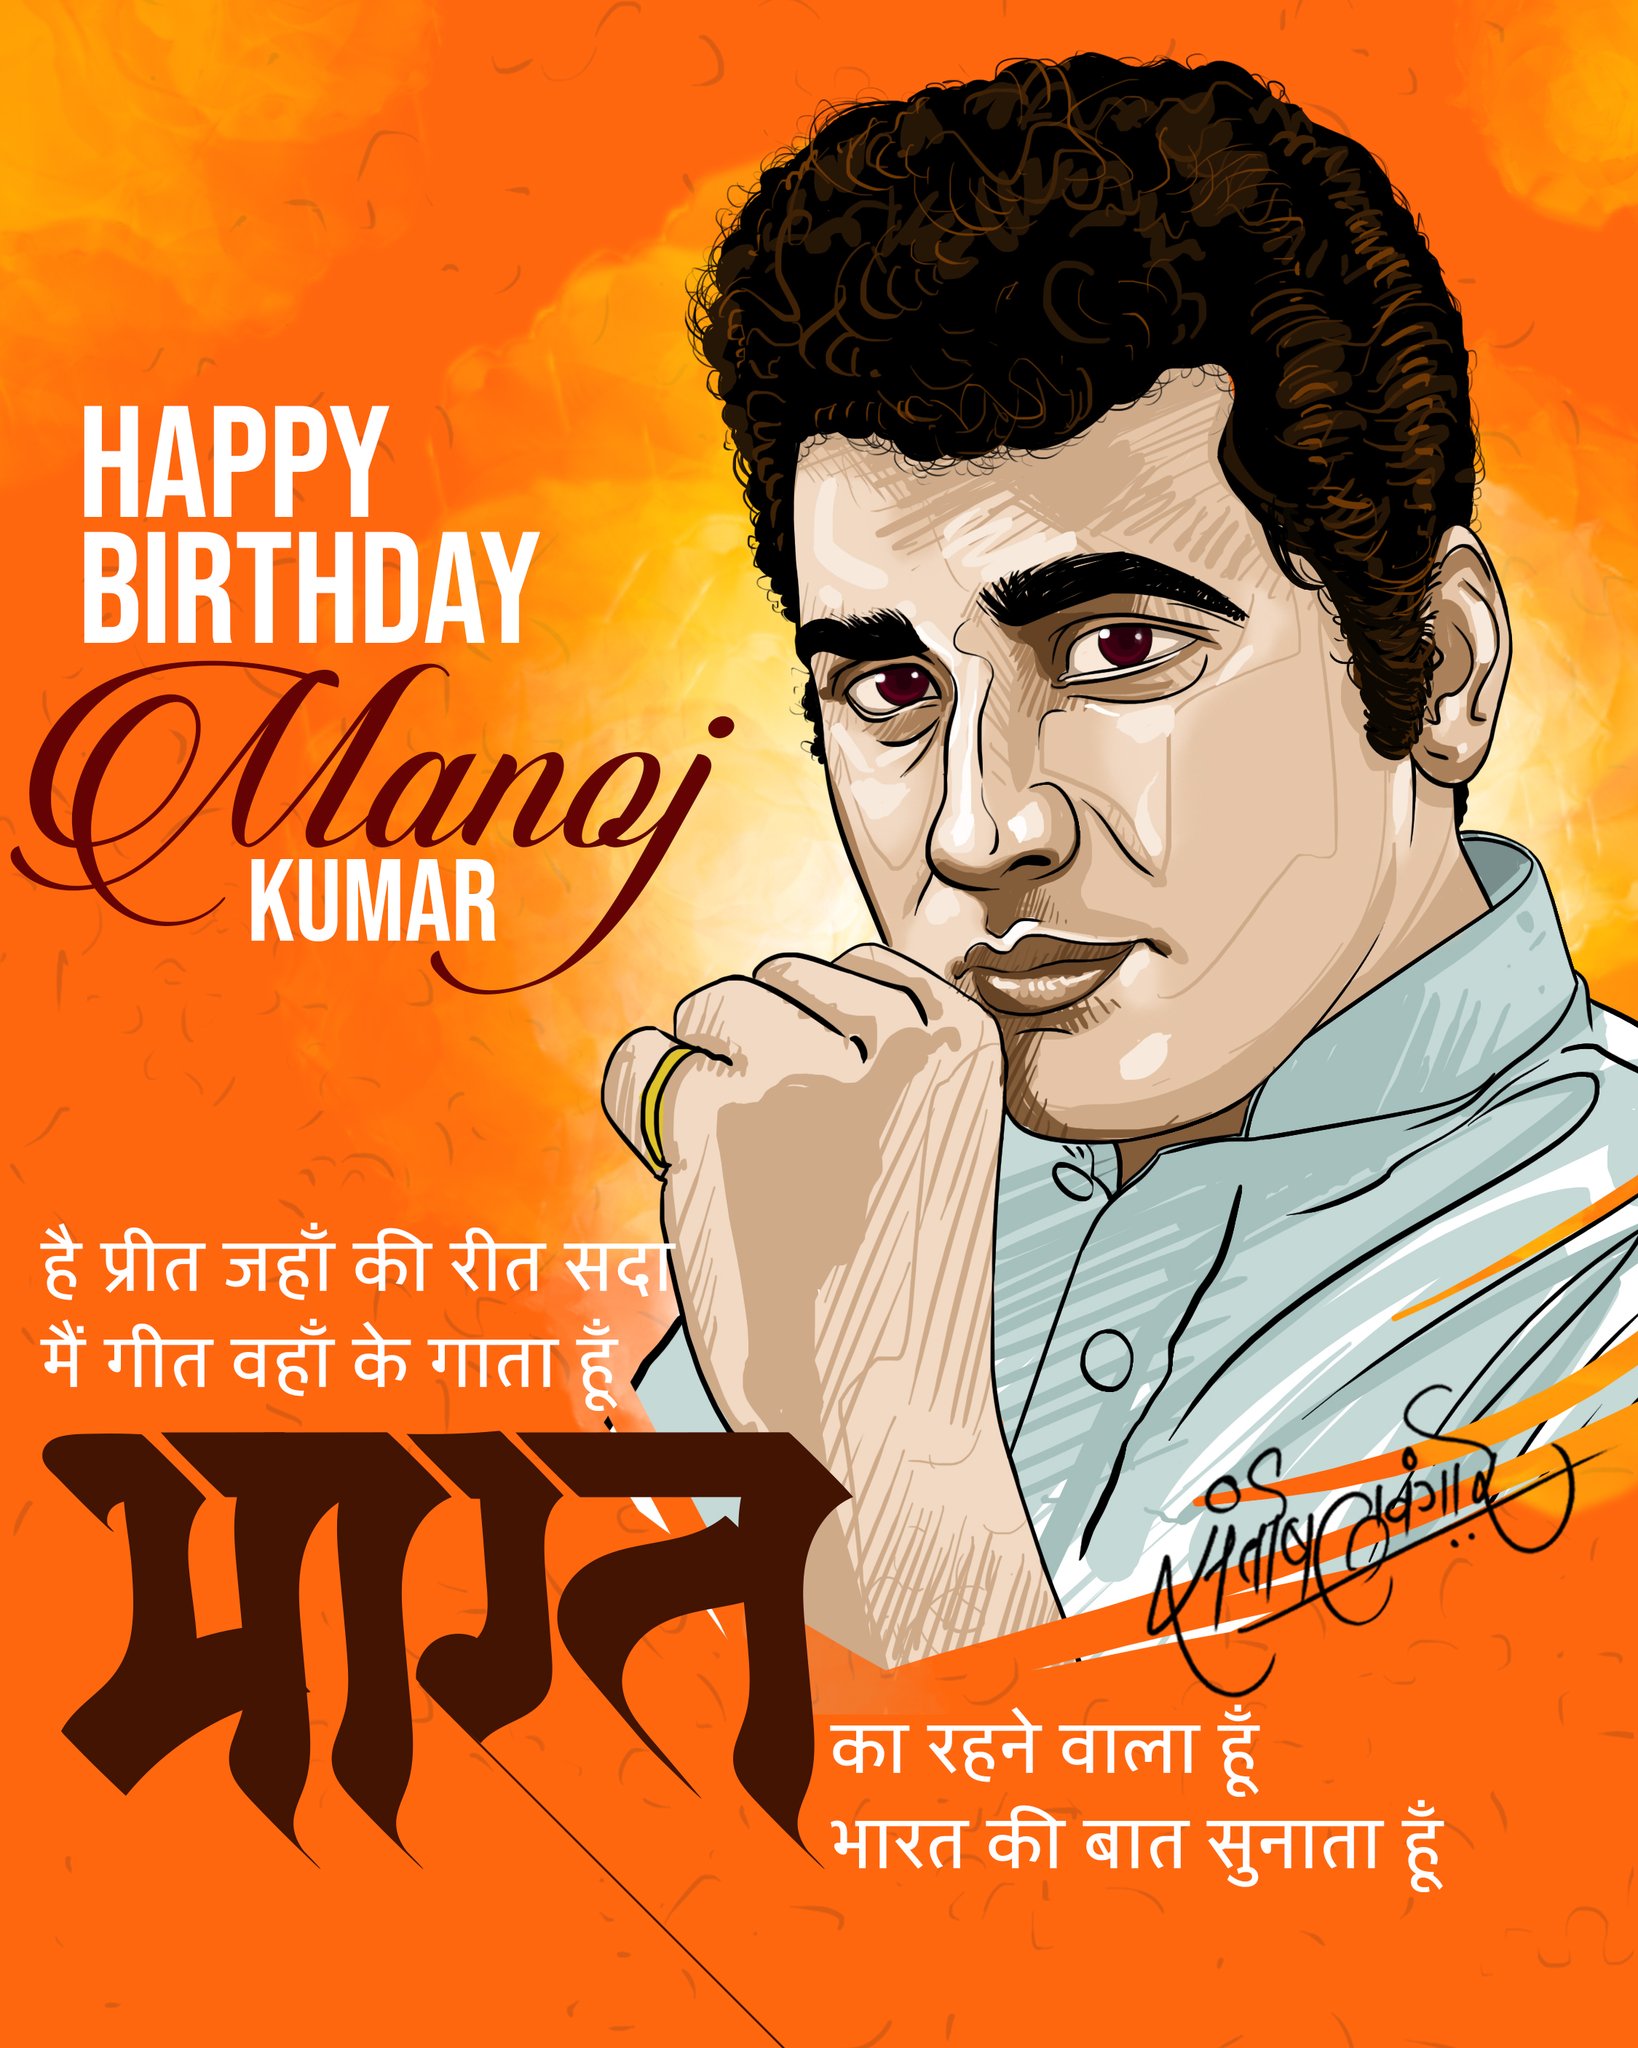 Happy Birthday, Manoj Kumar ji!   